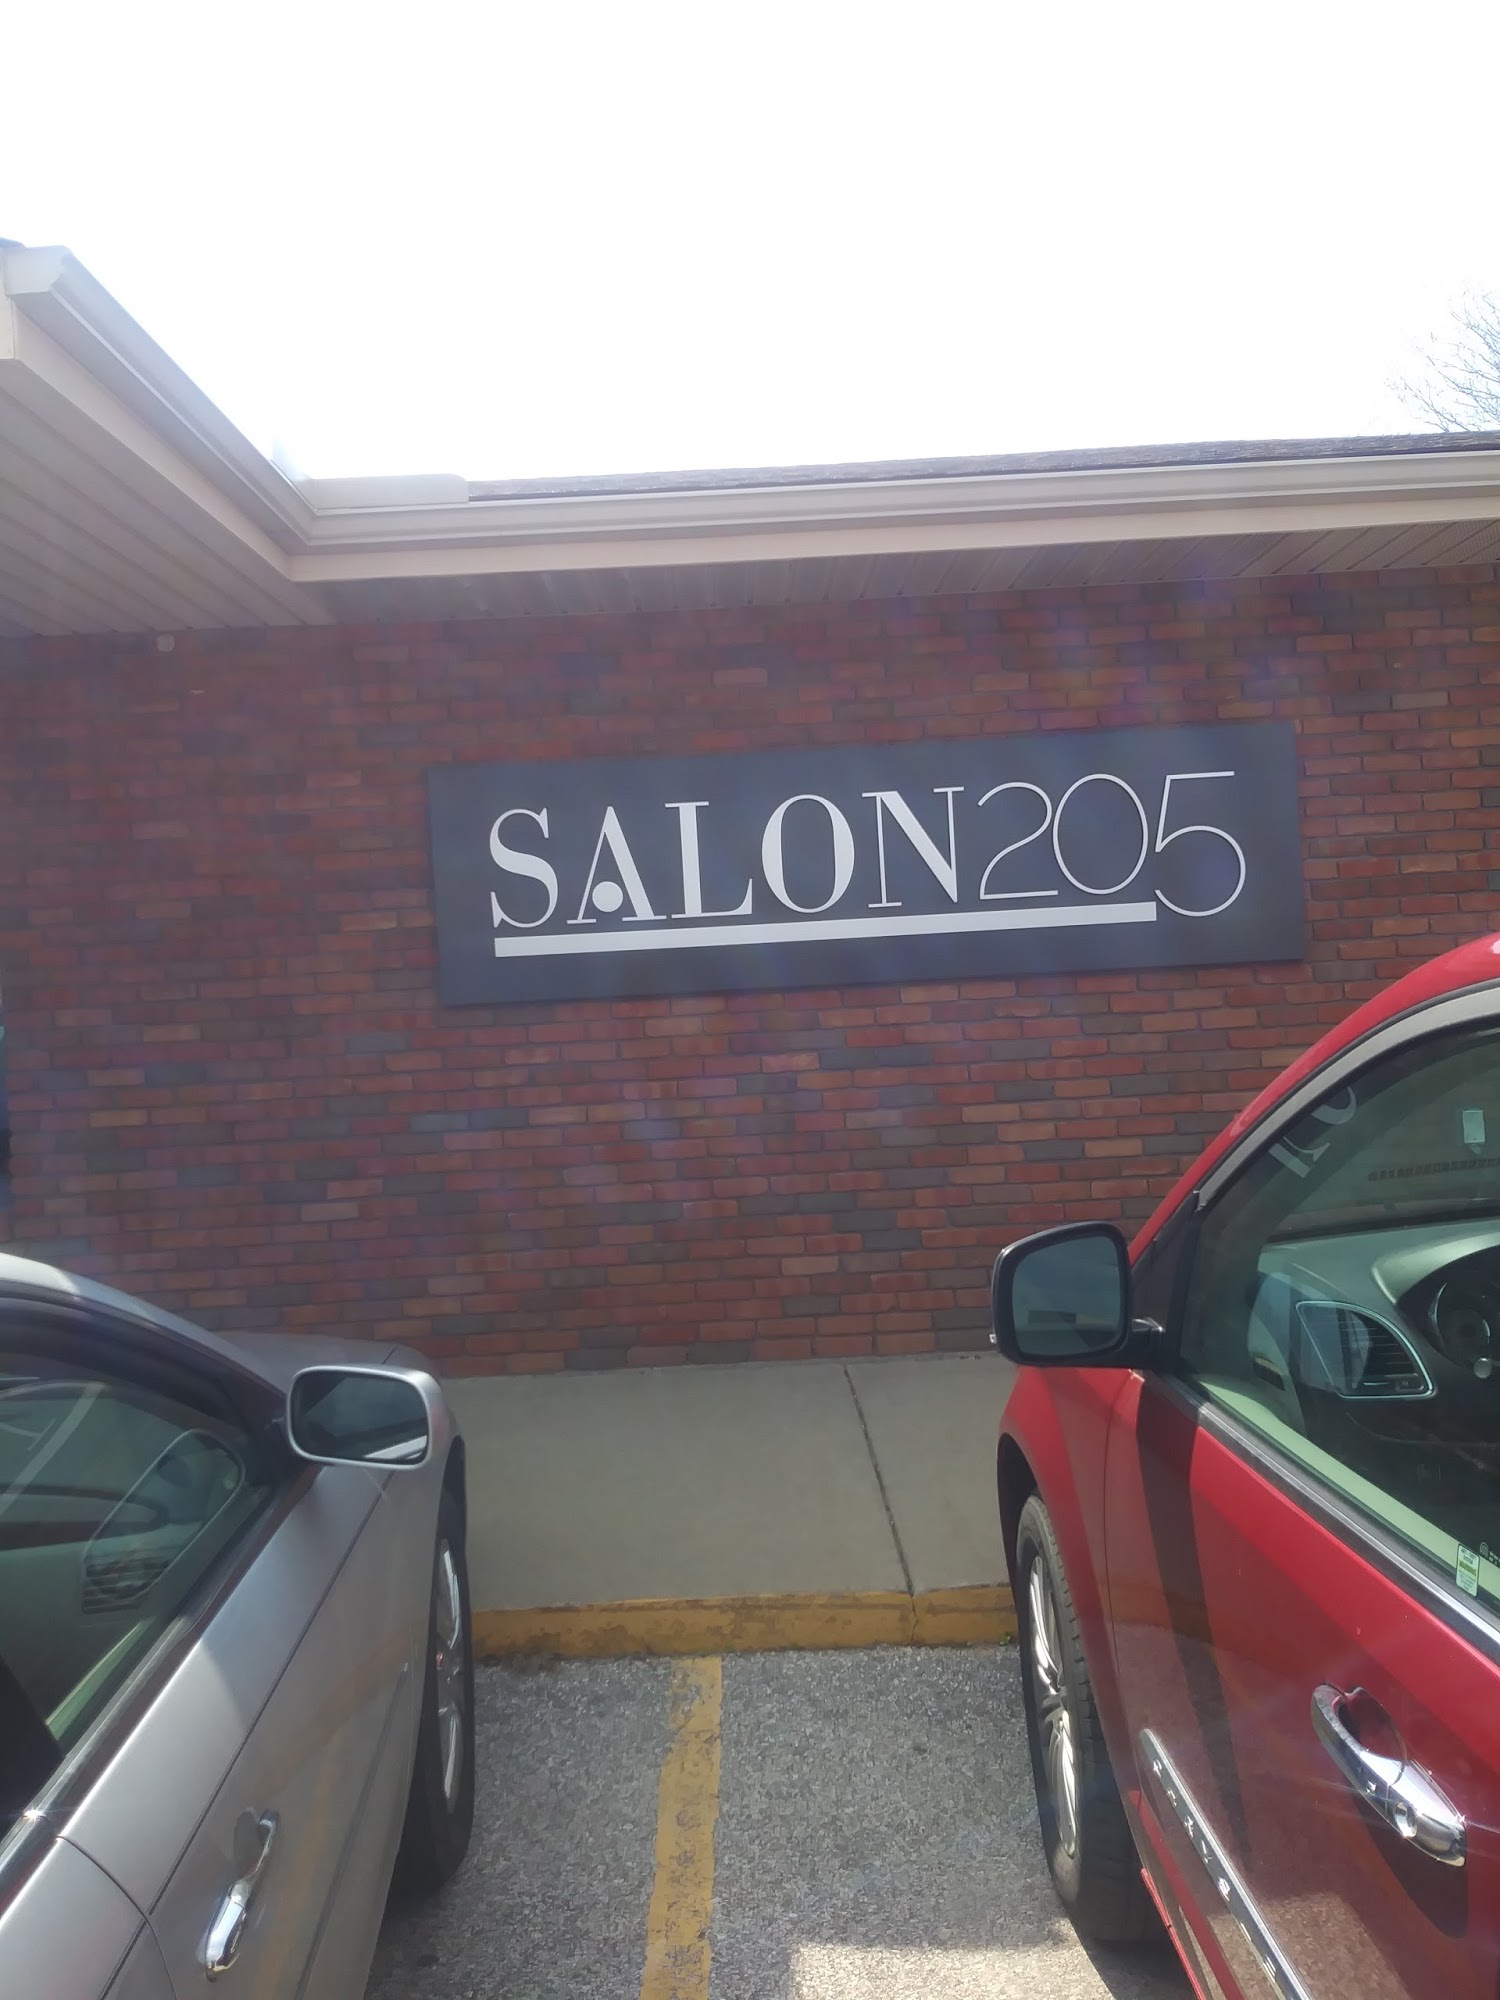 Salon 205